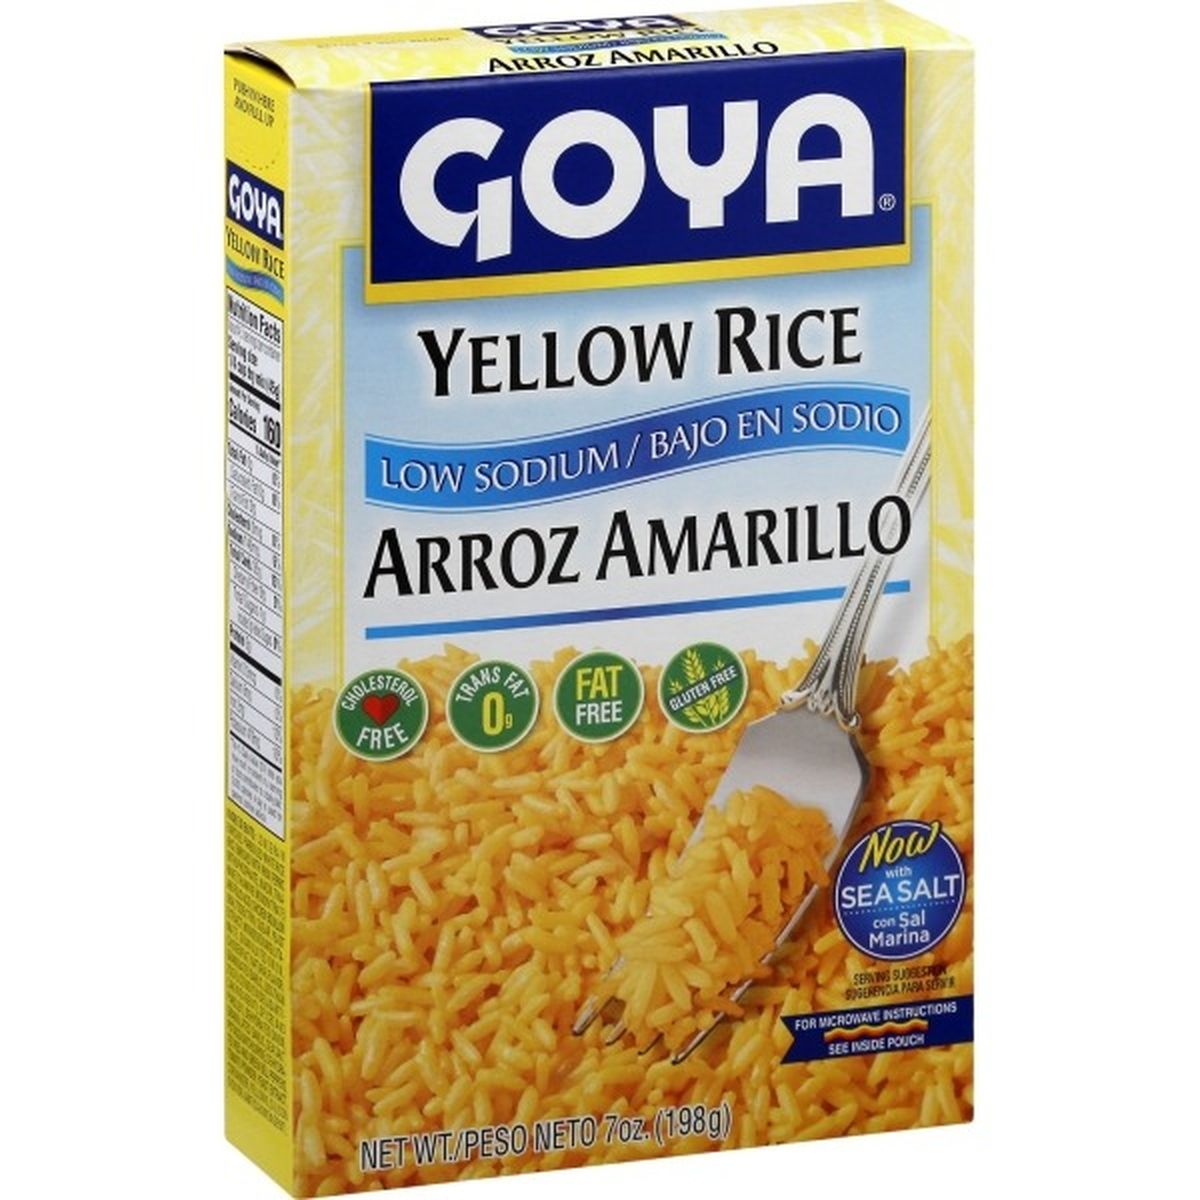 Calories in Goya Yellow Rice,  Low Sodium, Arroz Amarillo